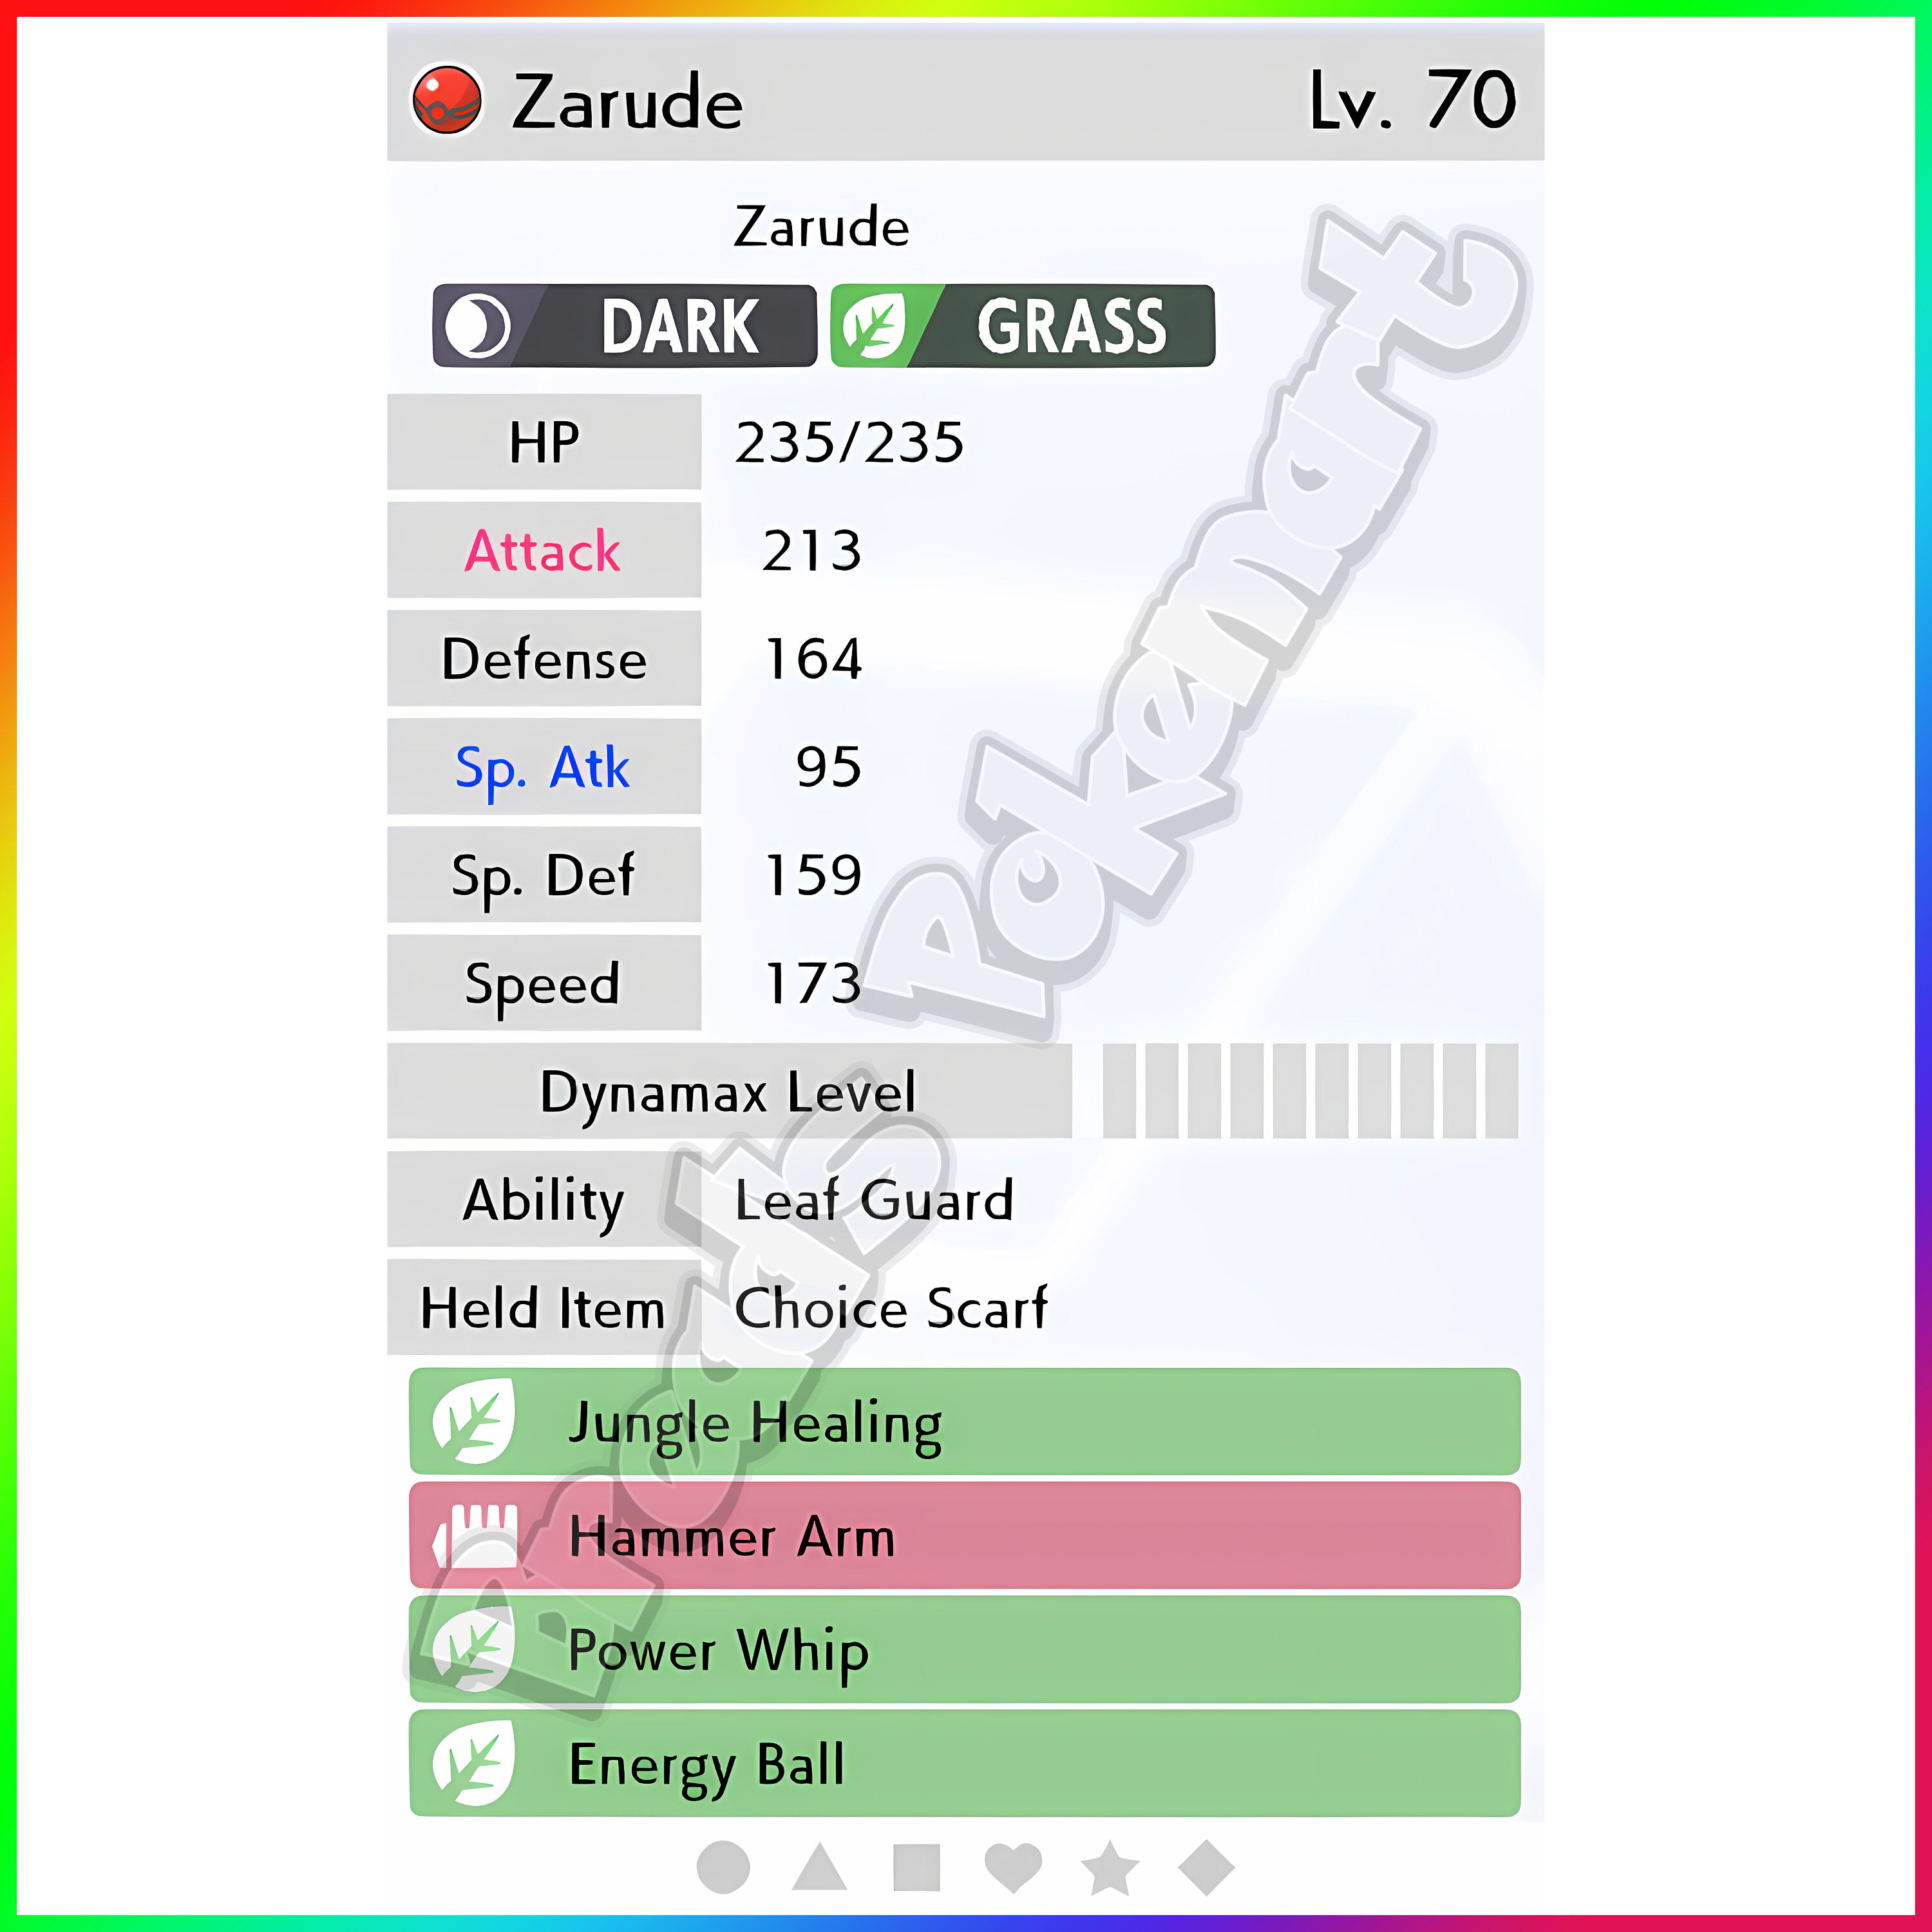 Zarude Dada 6IVs - Pokemon Sword & Shield